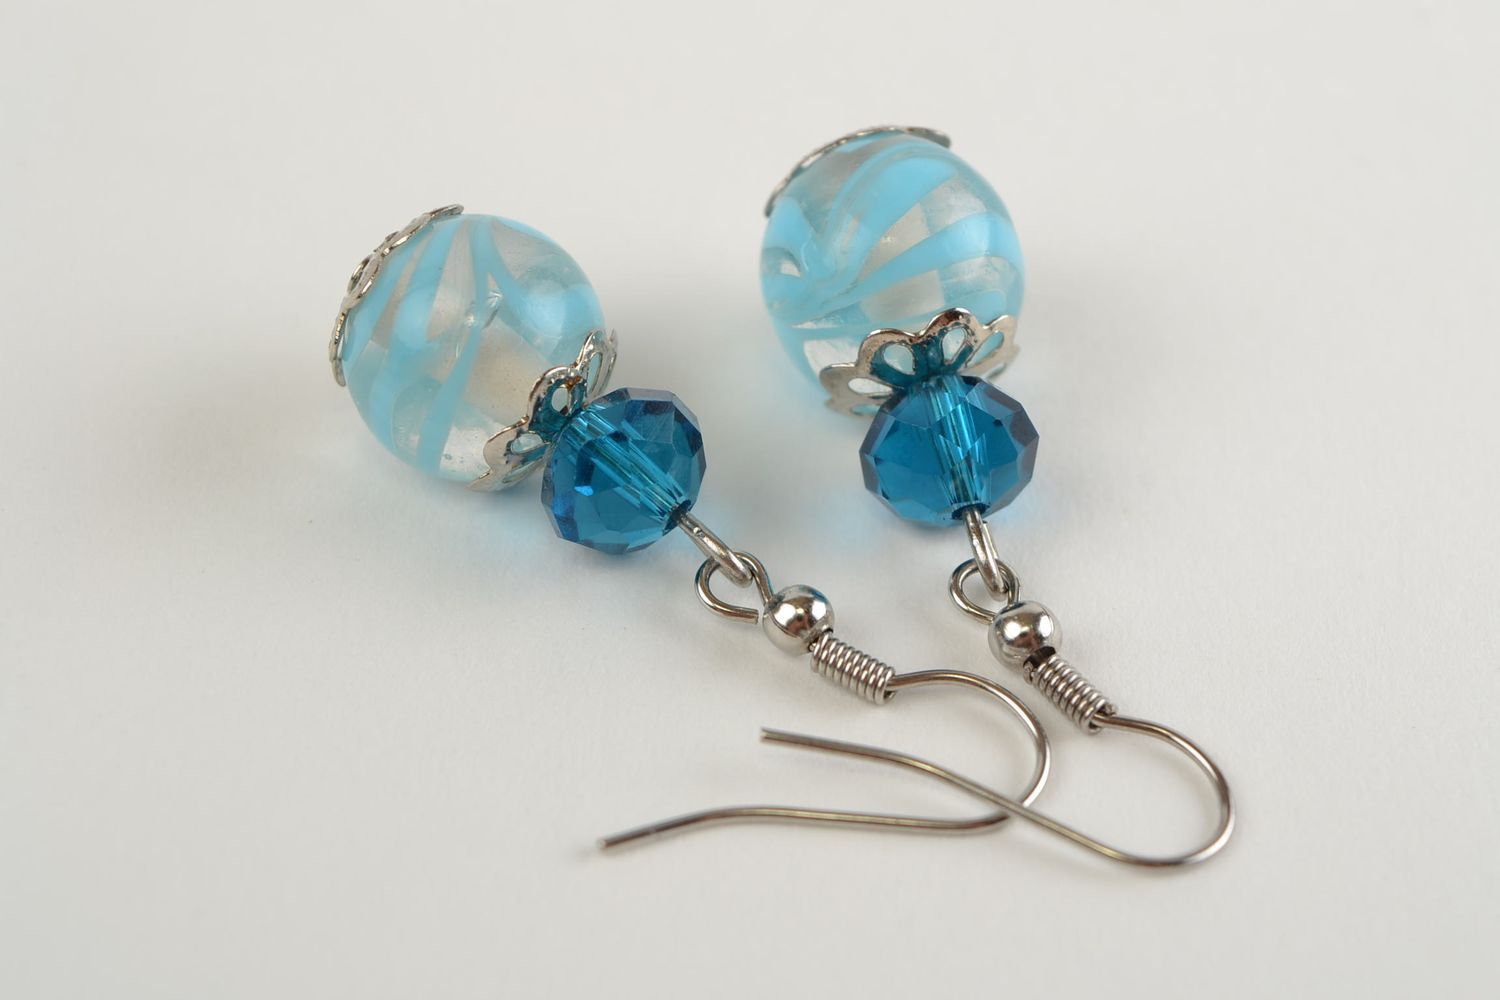 Handmade blue stone and glass bead jewelry set necklace earrings bracelet photo 4